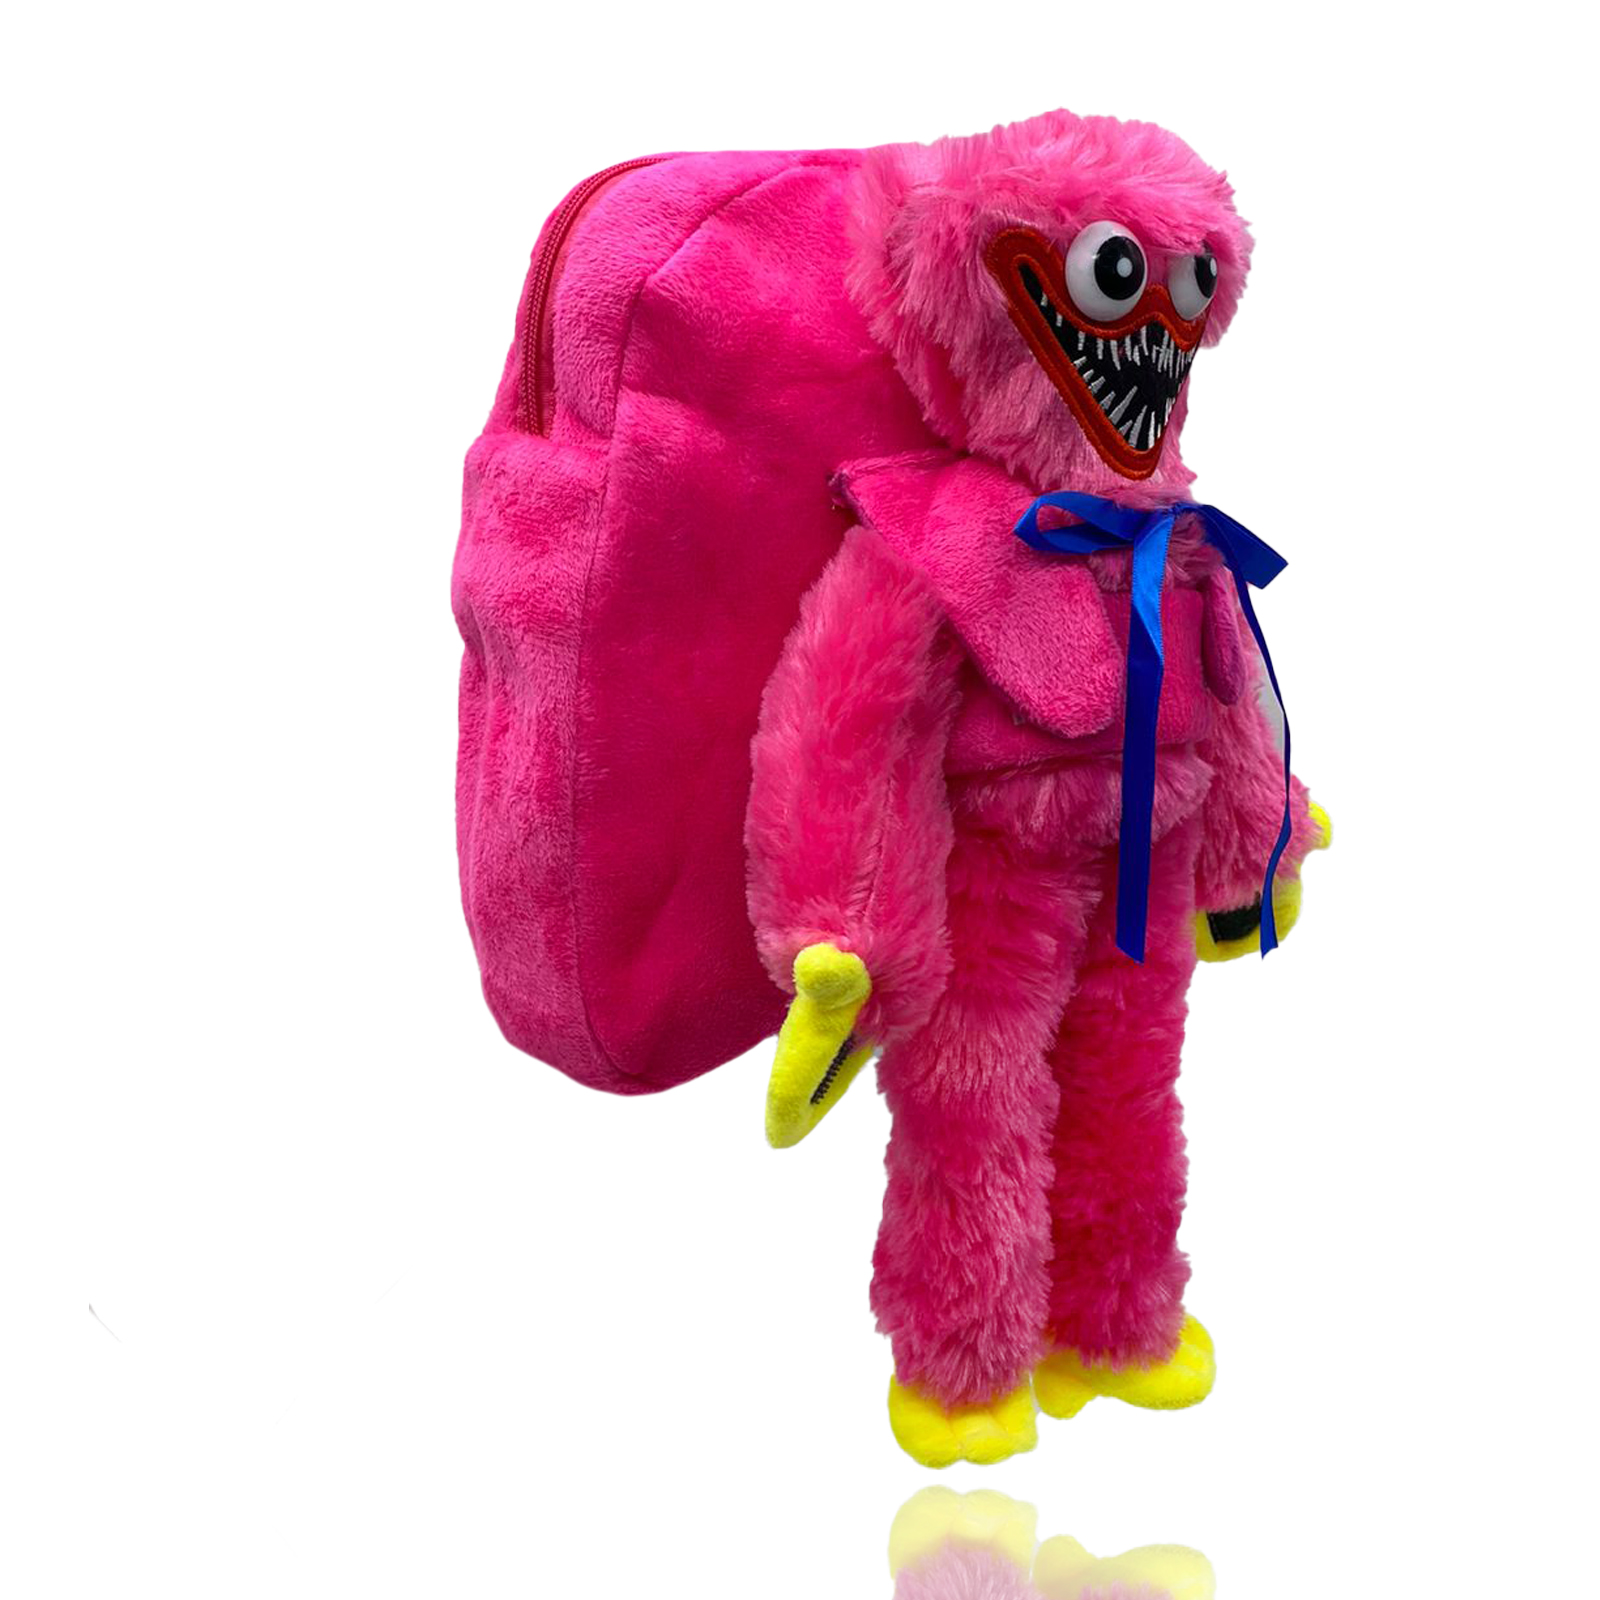 Рюкзак Nano Shop Хаги Ваги Киси Миси с мягкой игрушкой, розовый раскраска с хаги ваги фиолетовая